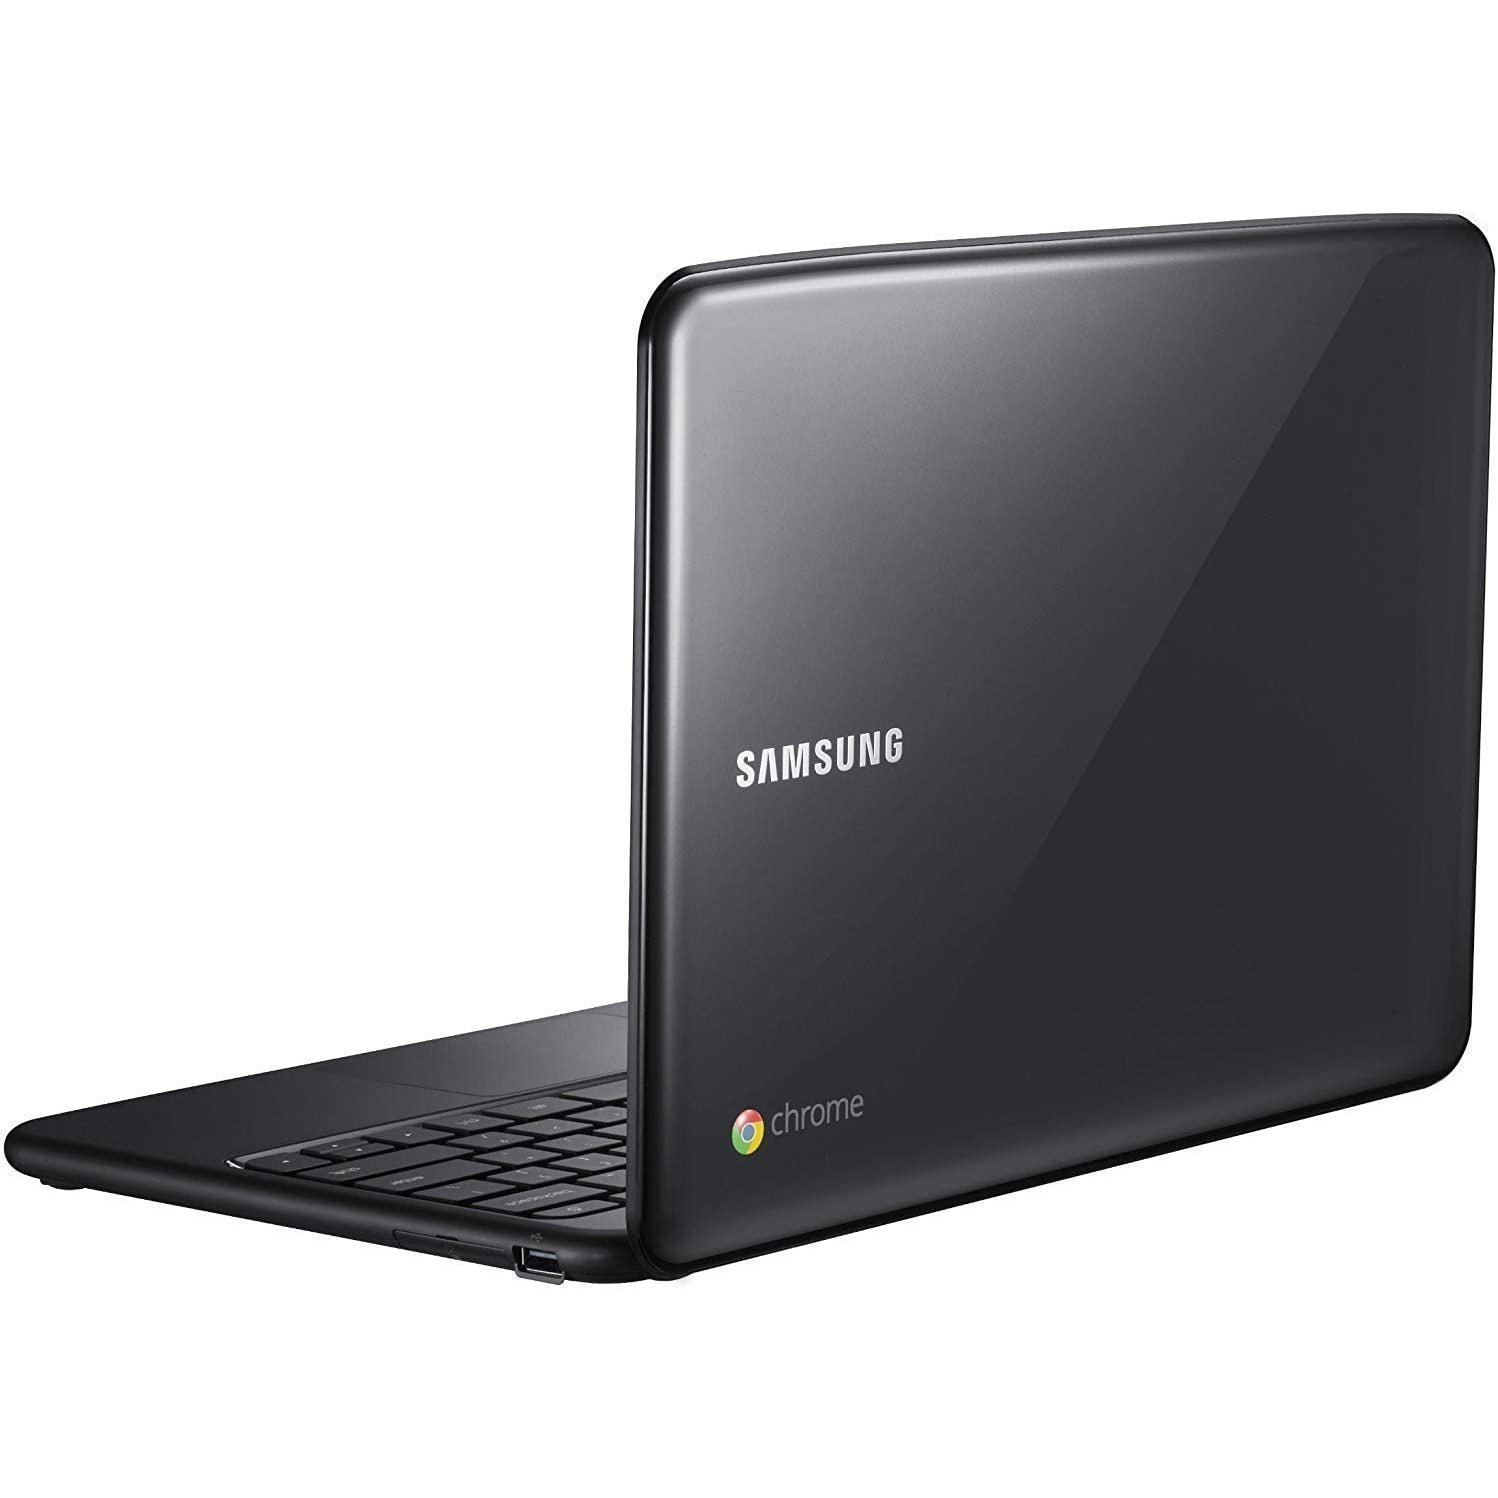 Samsung XE500C21 Laptop, Intel Atom N570, 2GB RAM, 16GB HDD, 12.1", Black